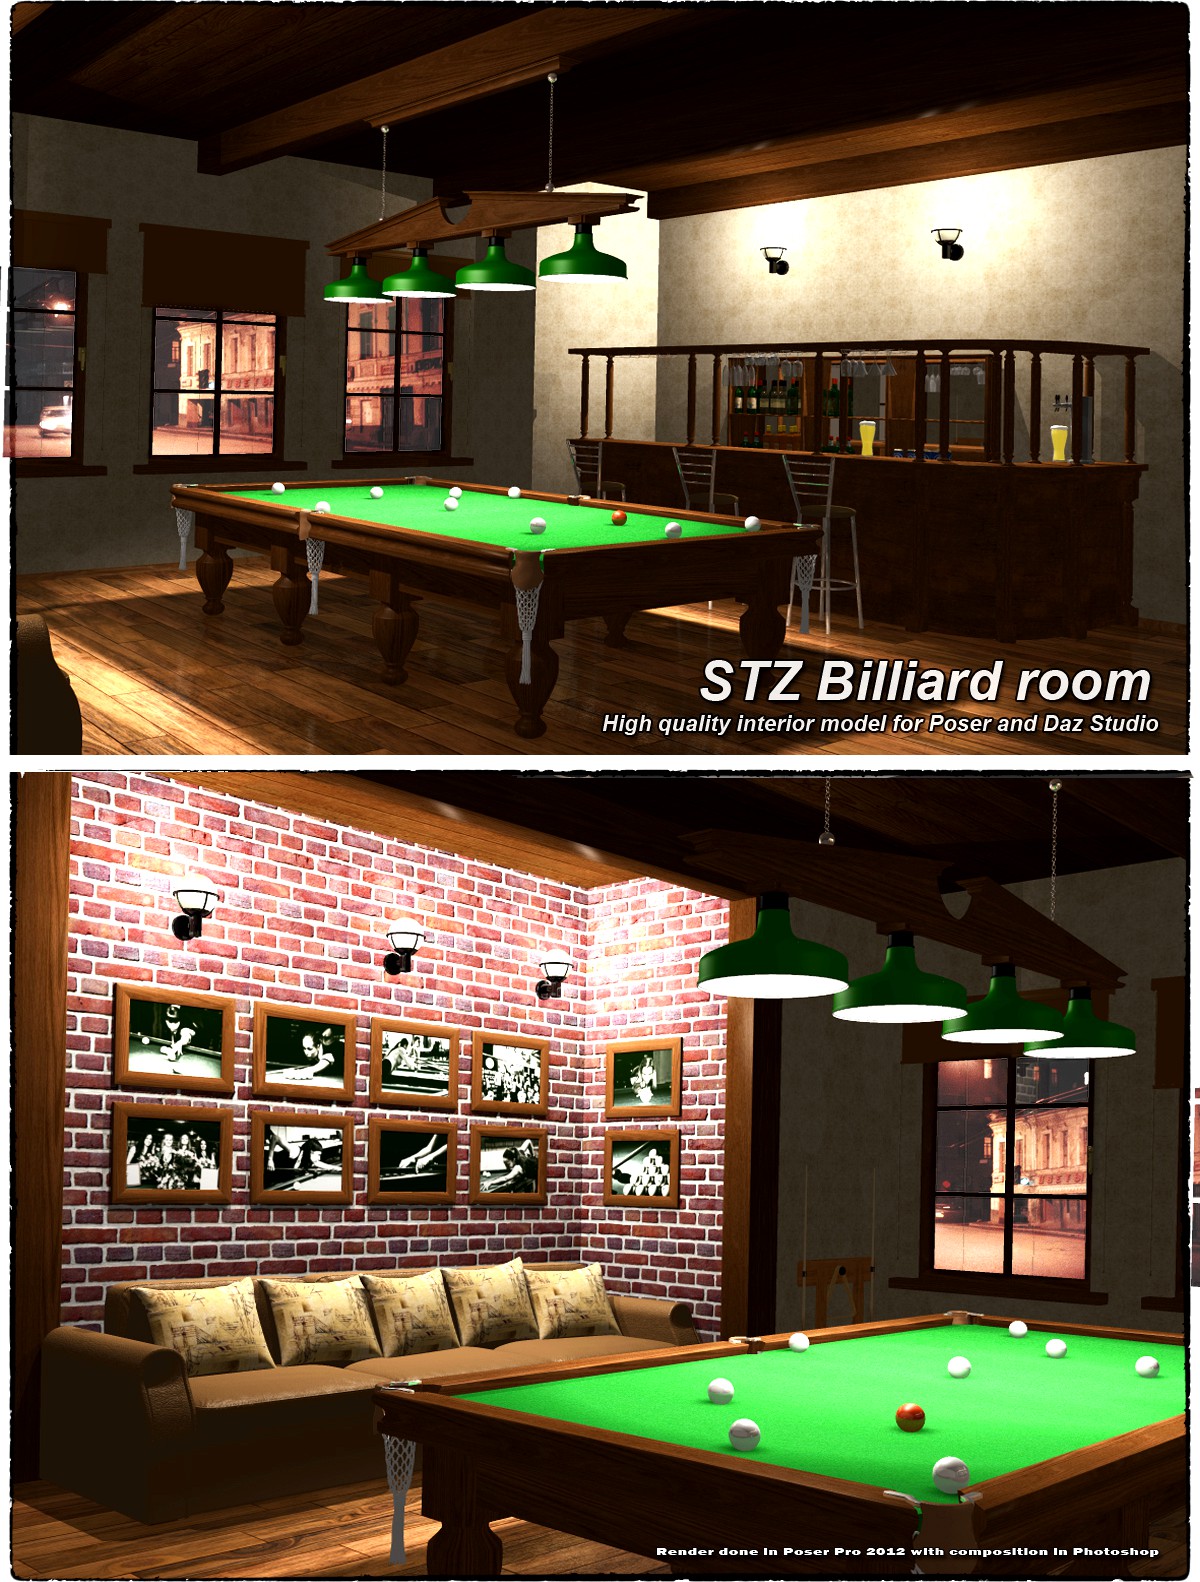 STZ Billiard room